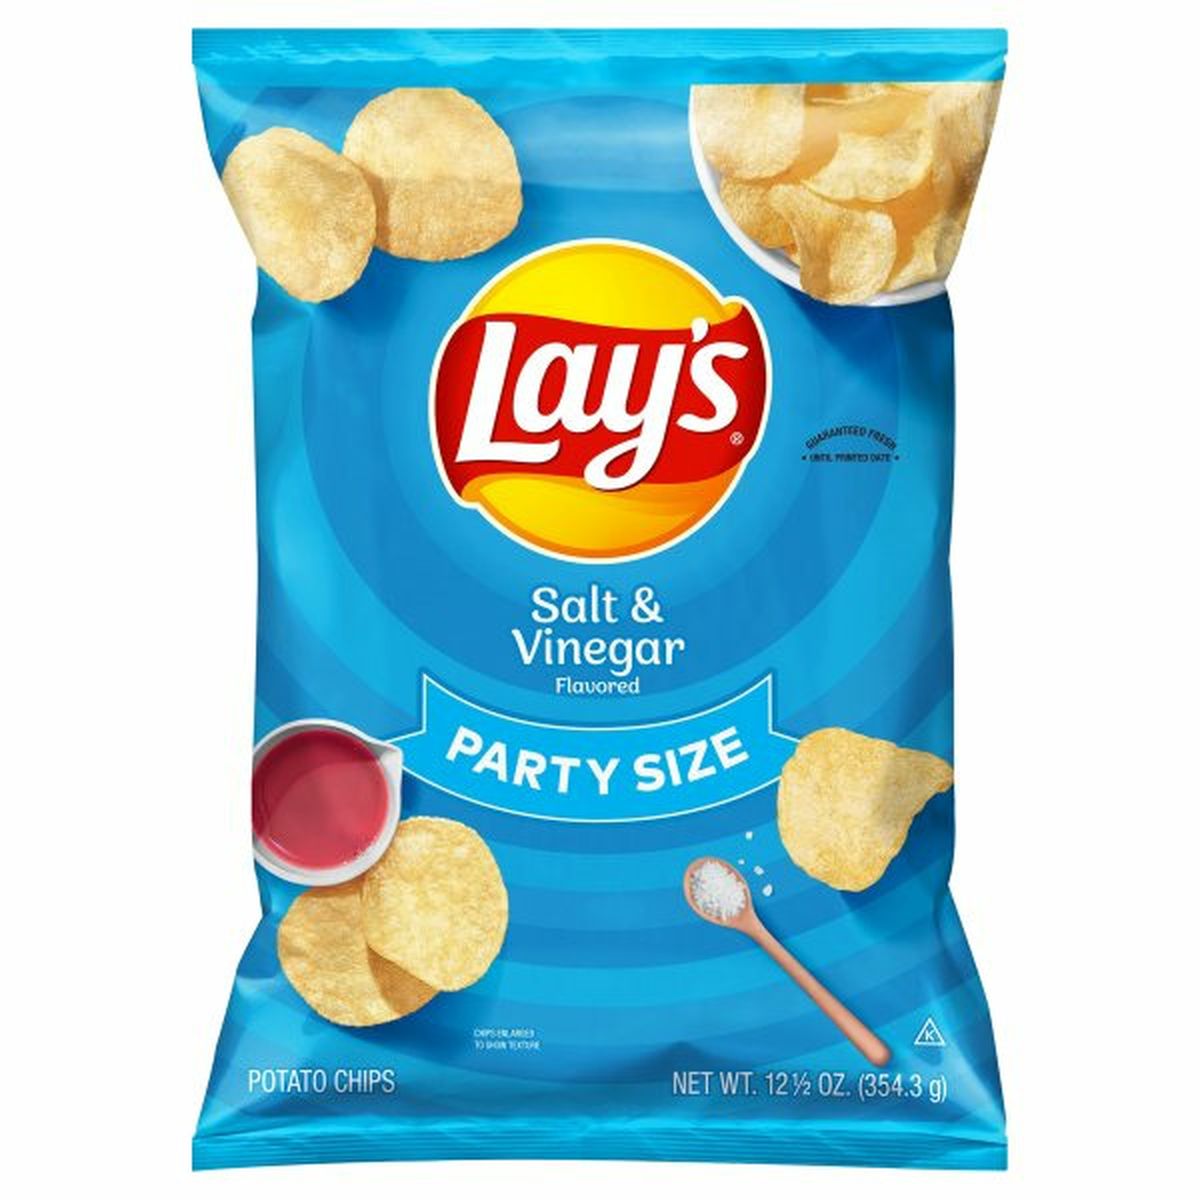 Calories in Lay's Potato Chips, Salt & Vinegar